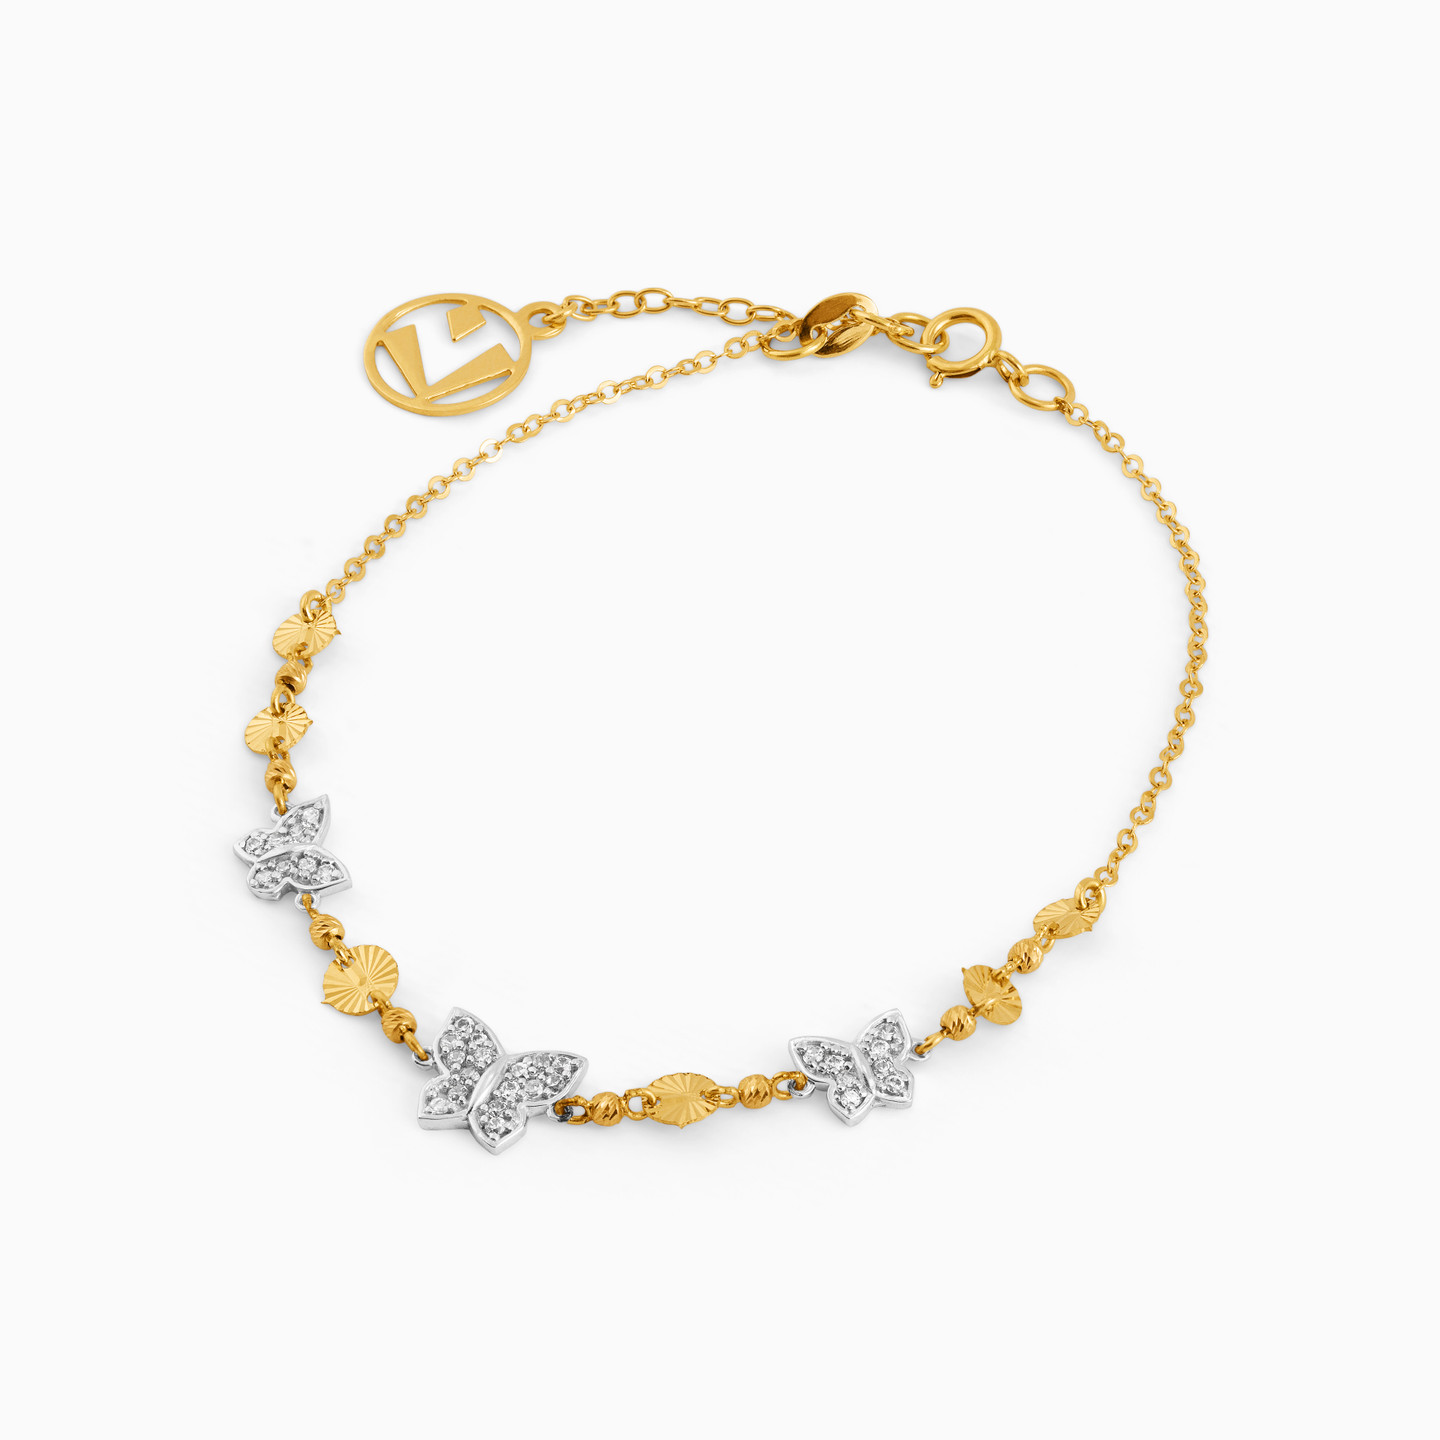 18K Gold Cubic Zirconia Chain Bracelet - 2